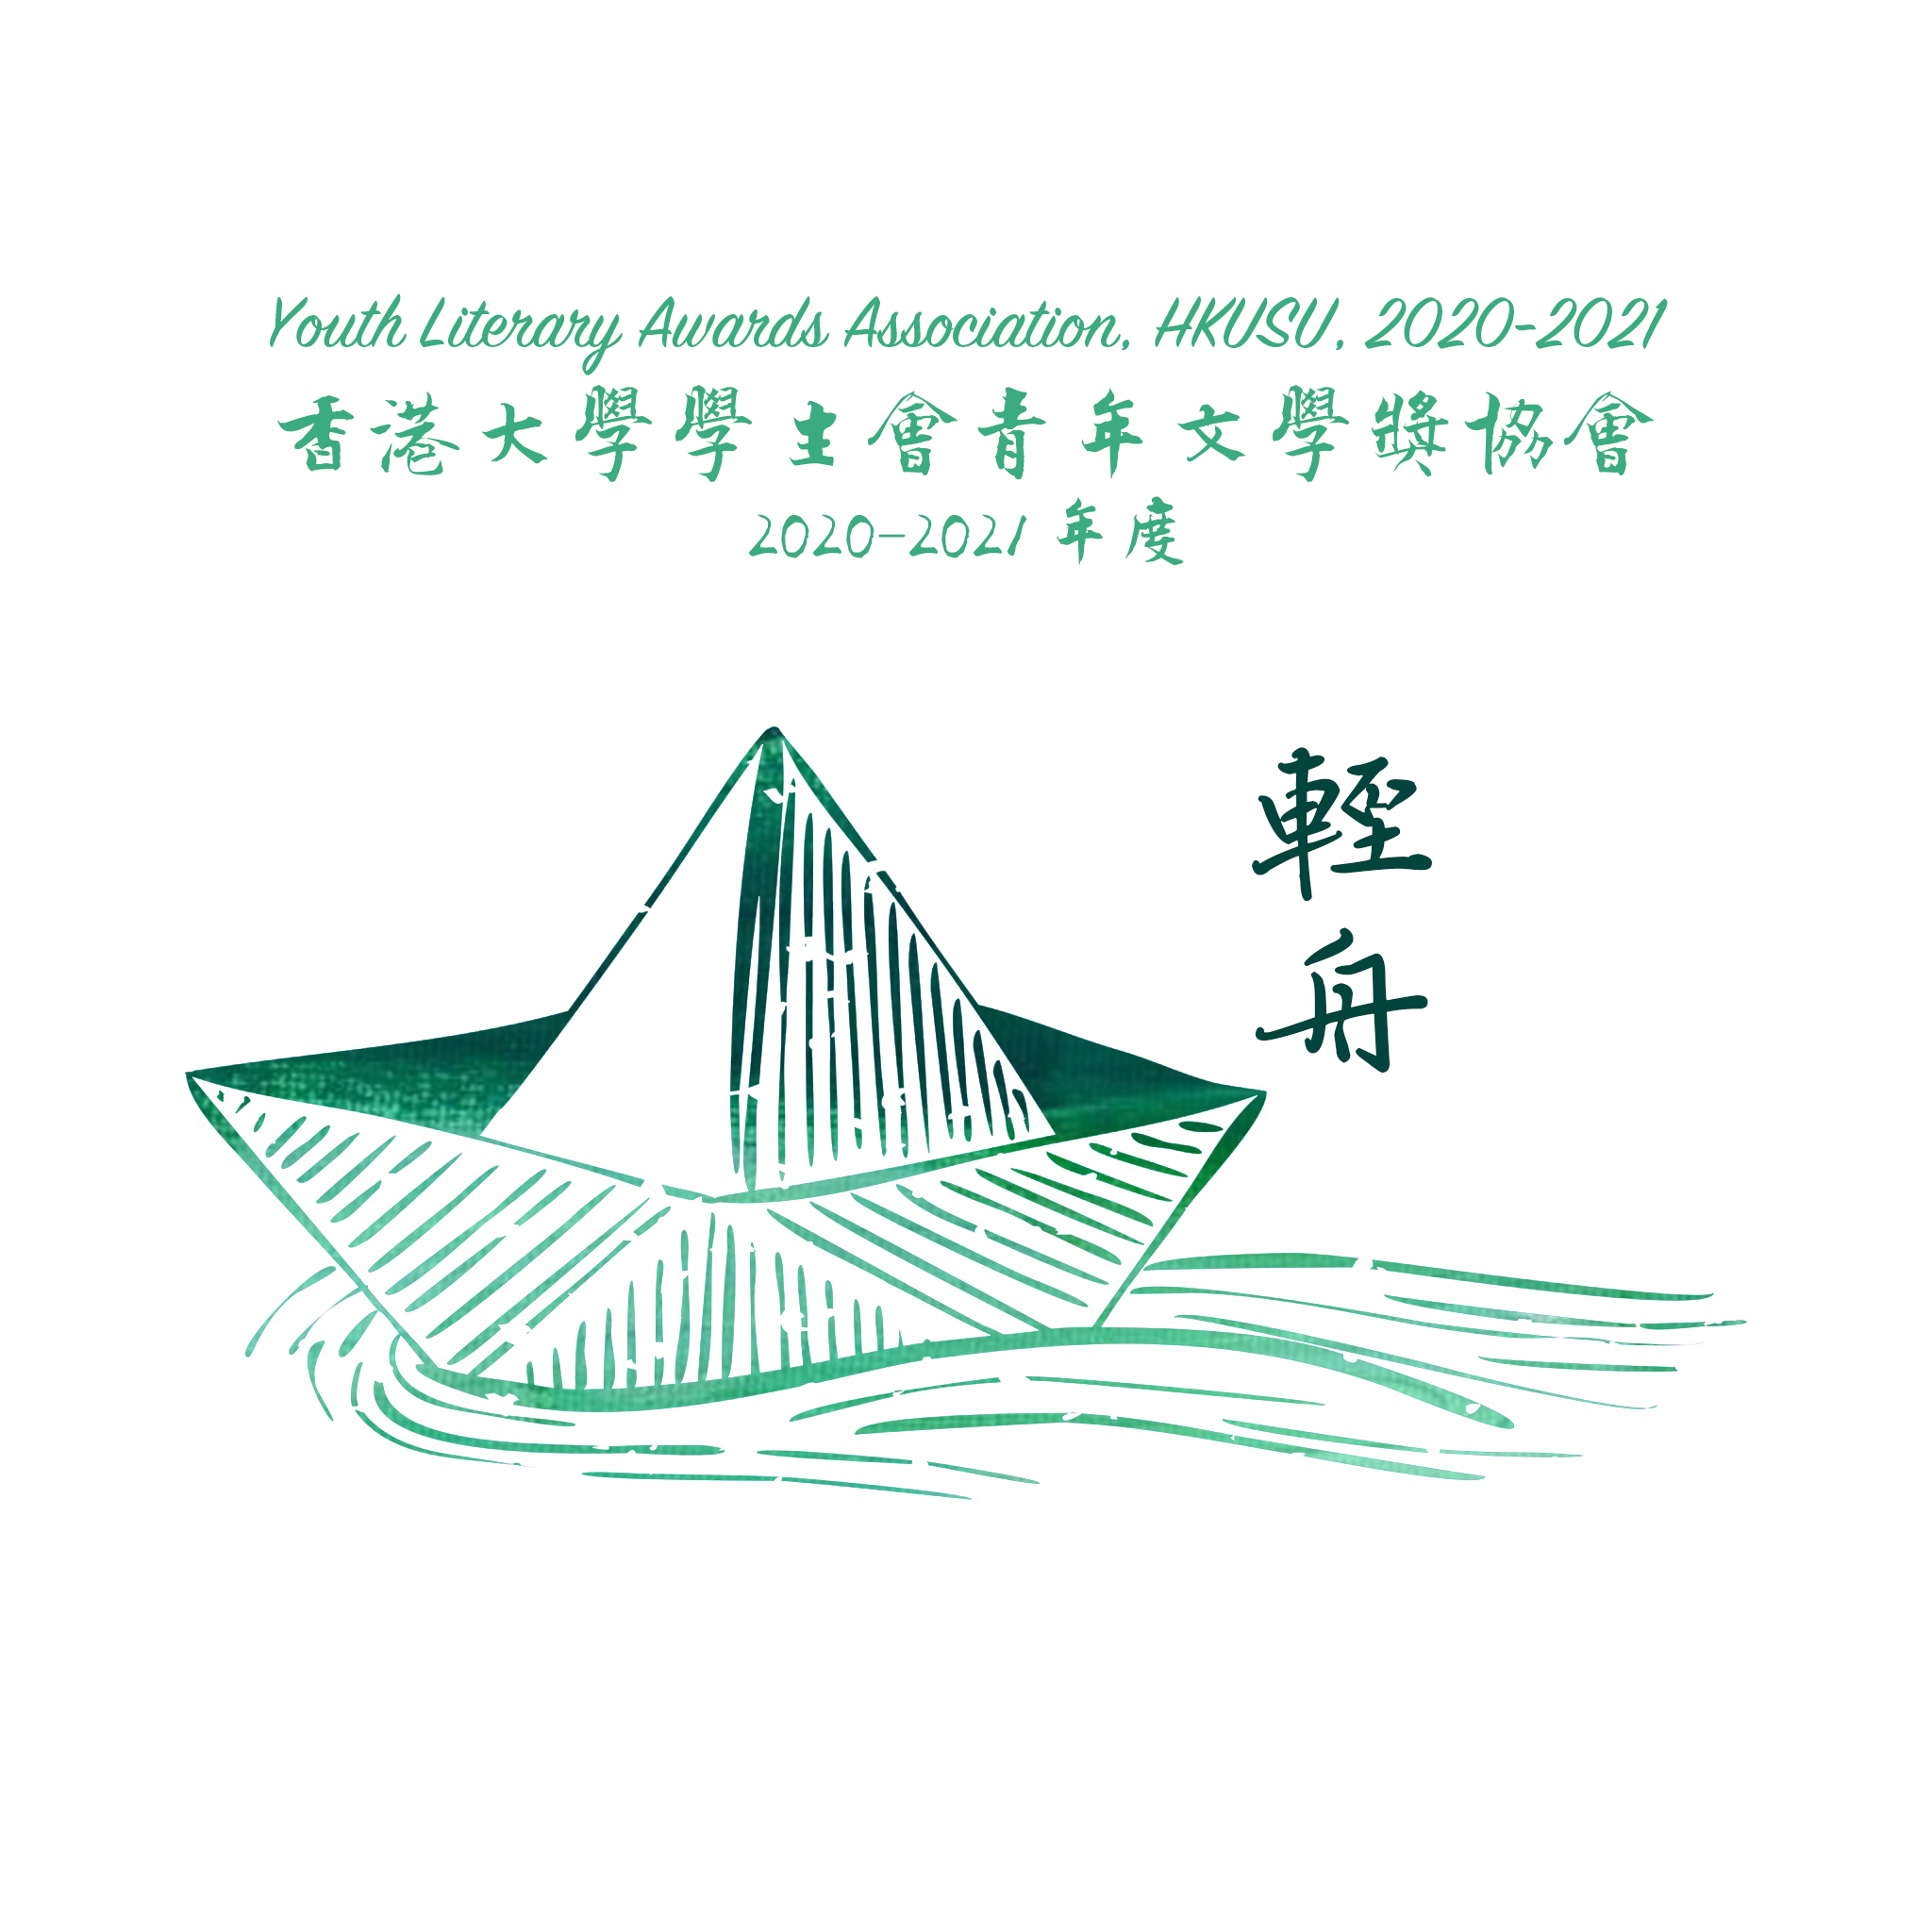 The Youth Literary Awards Association, HKUSU Session 2020-2021